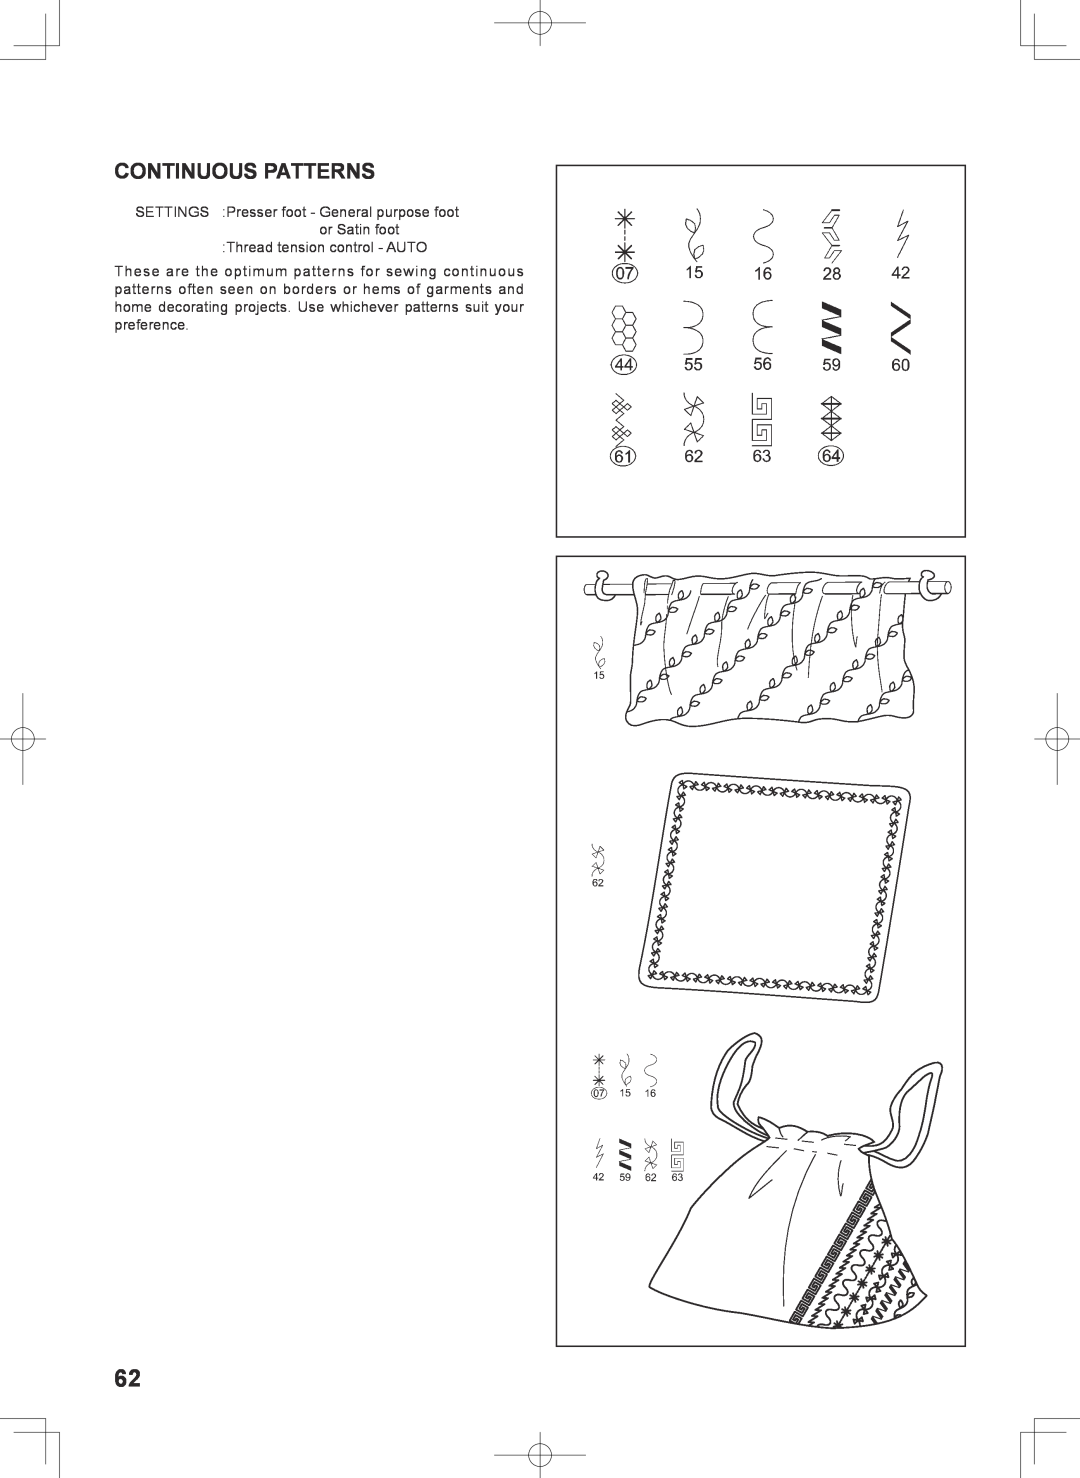 Singer 7467S instruction manual Continuous Patterns, SETTINGS Presser foot - General purpose foot or Satin foot 